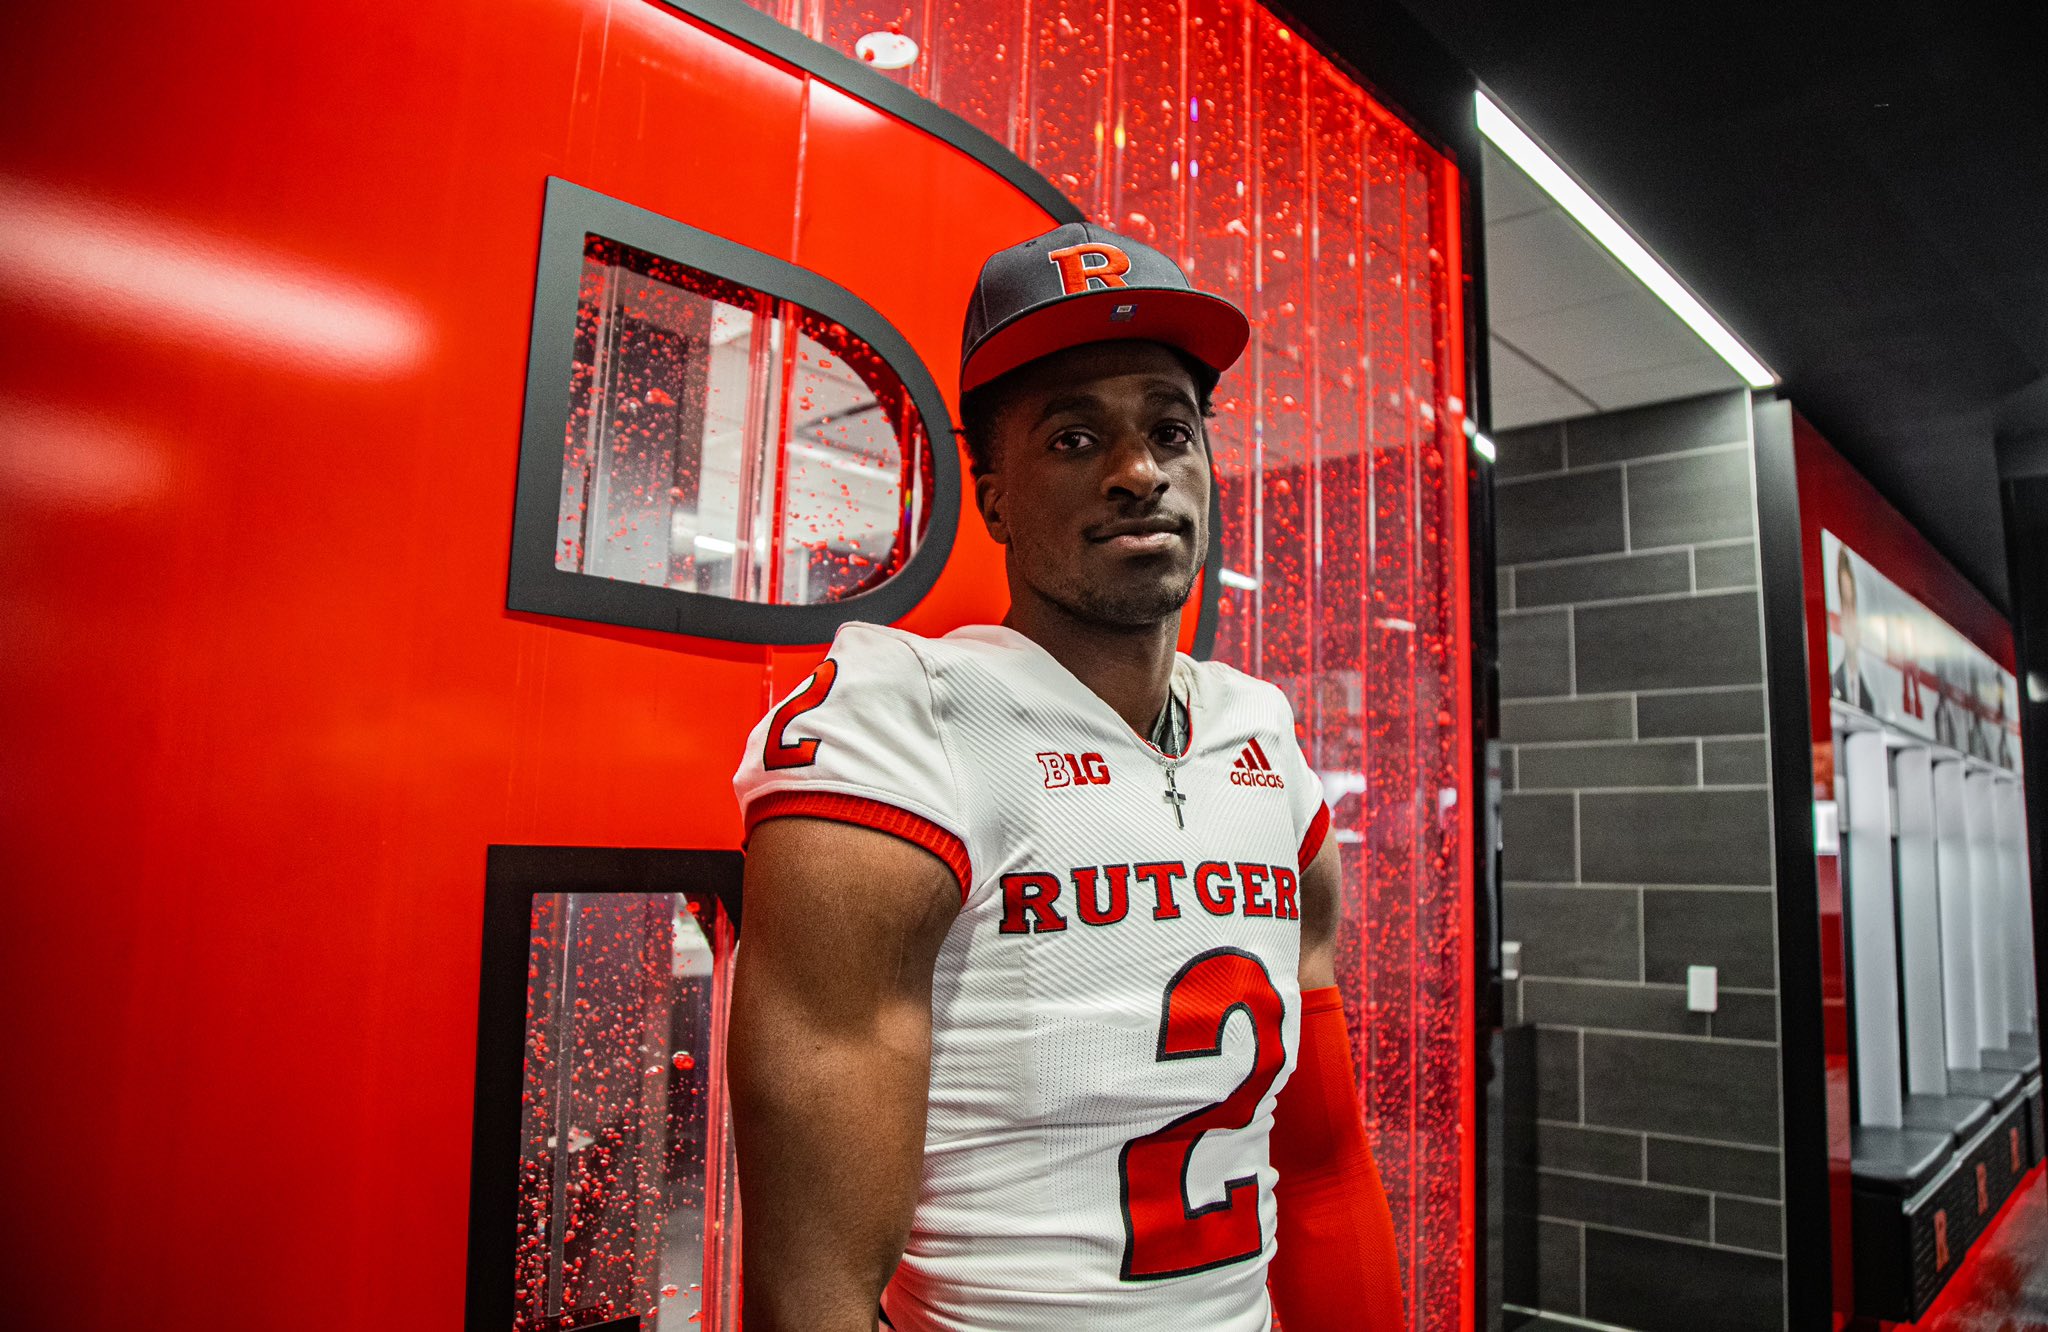 Rutgers' hard work on North Carolina speedster with NFL pedigree